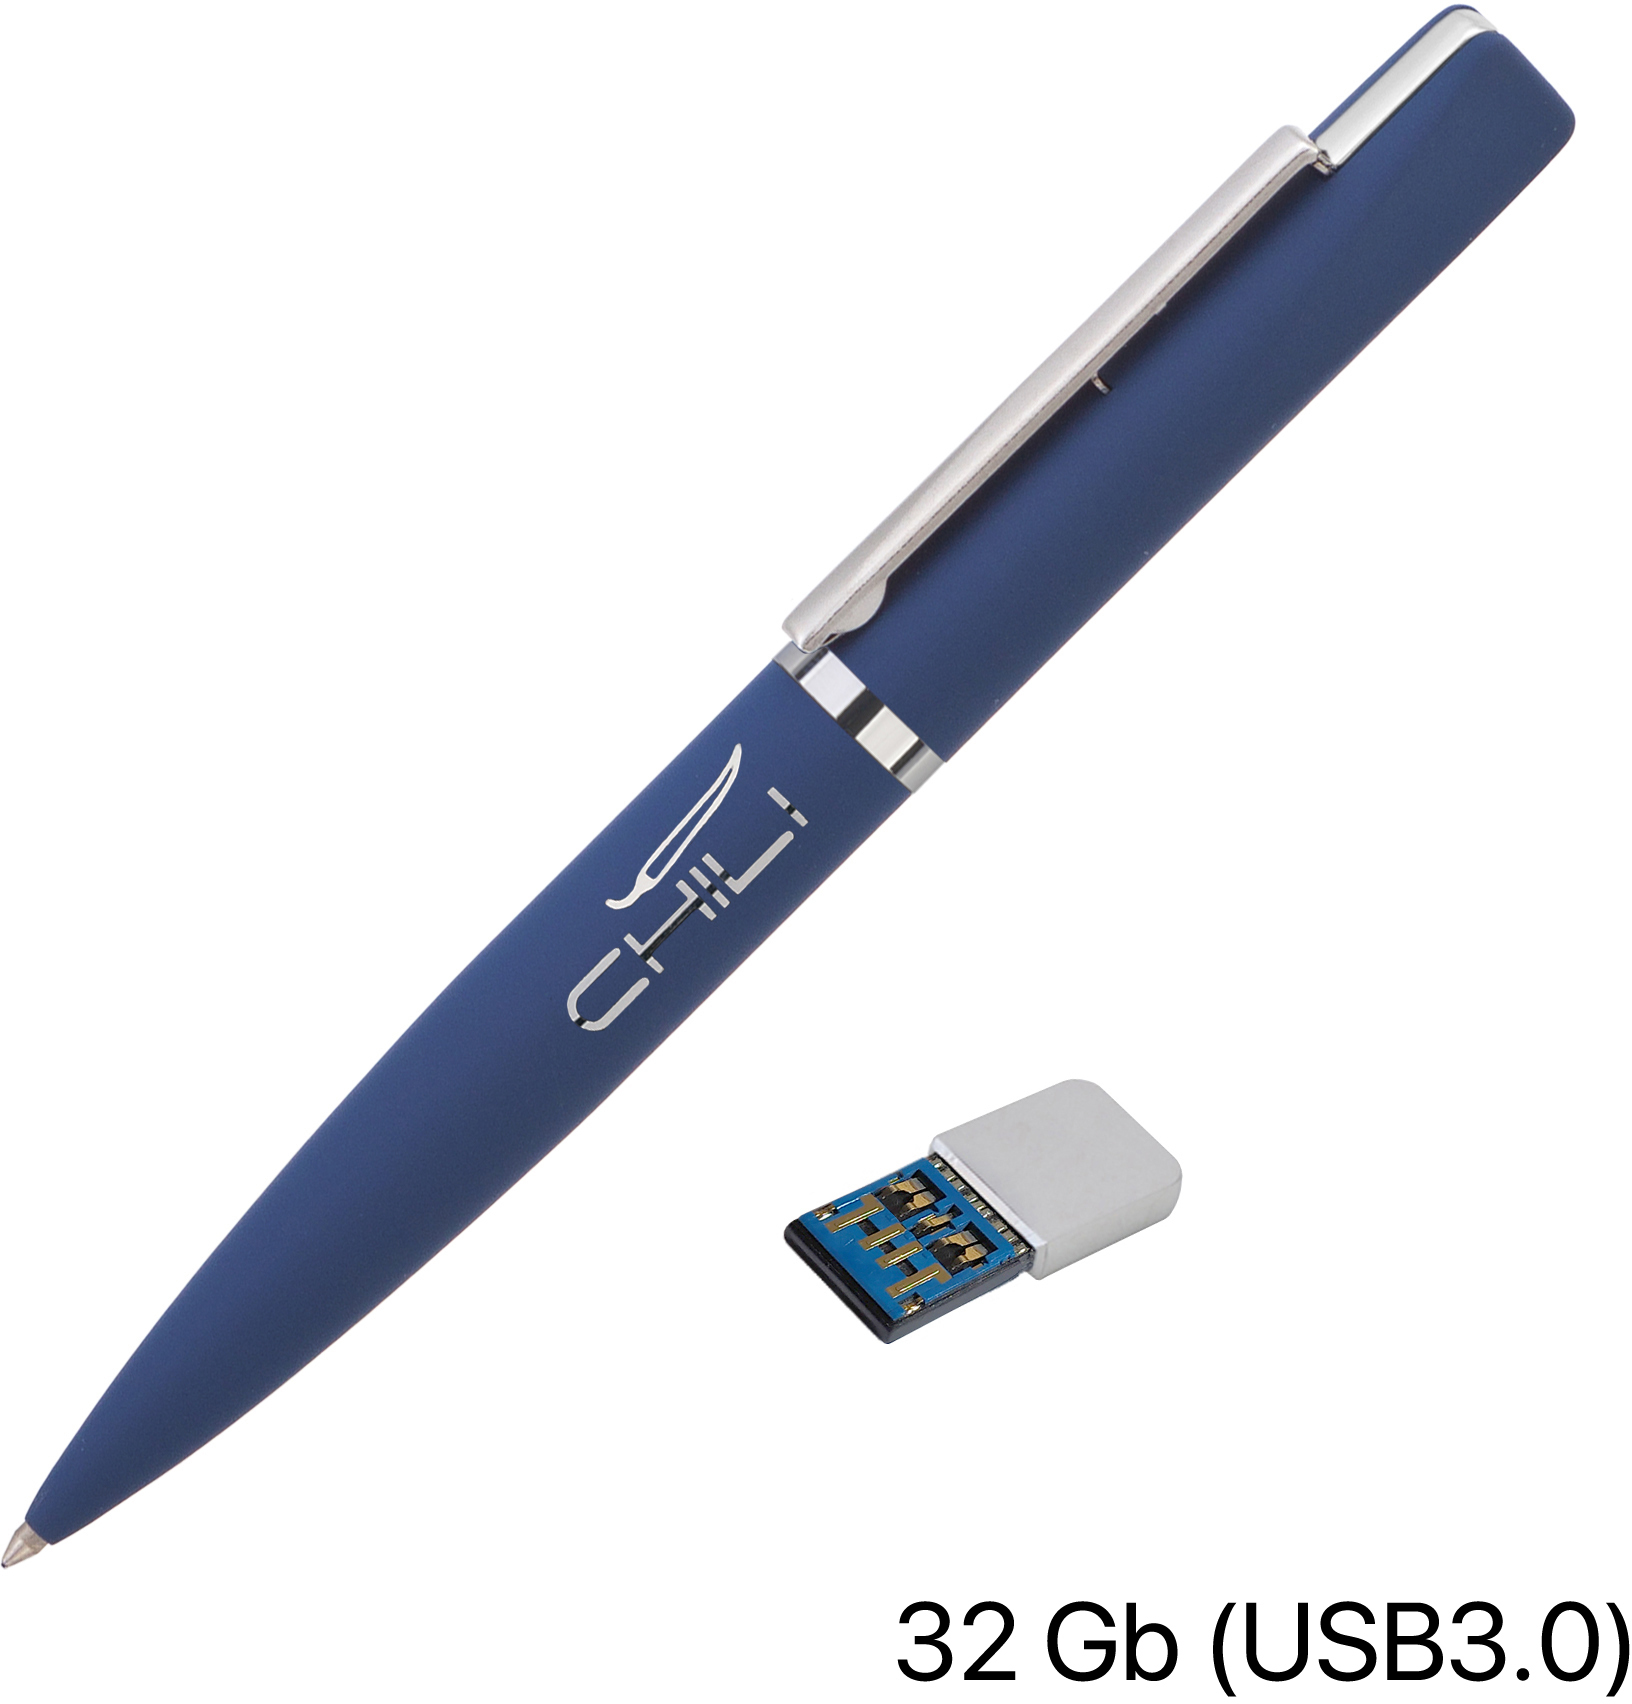 Артикул: E6828-21S/32Gb3 — Ручка шариковая "Callisto" с флеш-картой 32Gb (USB3.0), покрытие soft touch